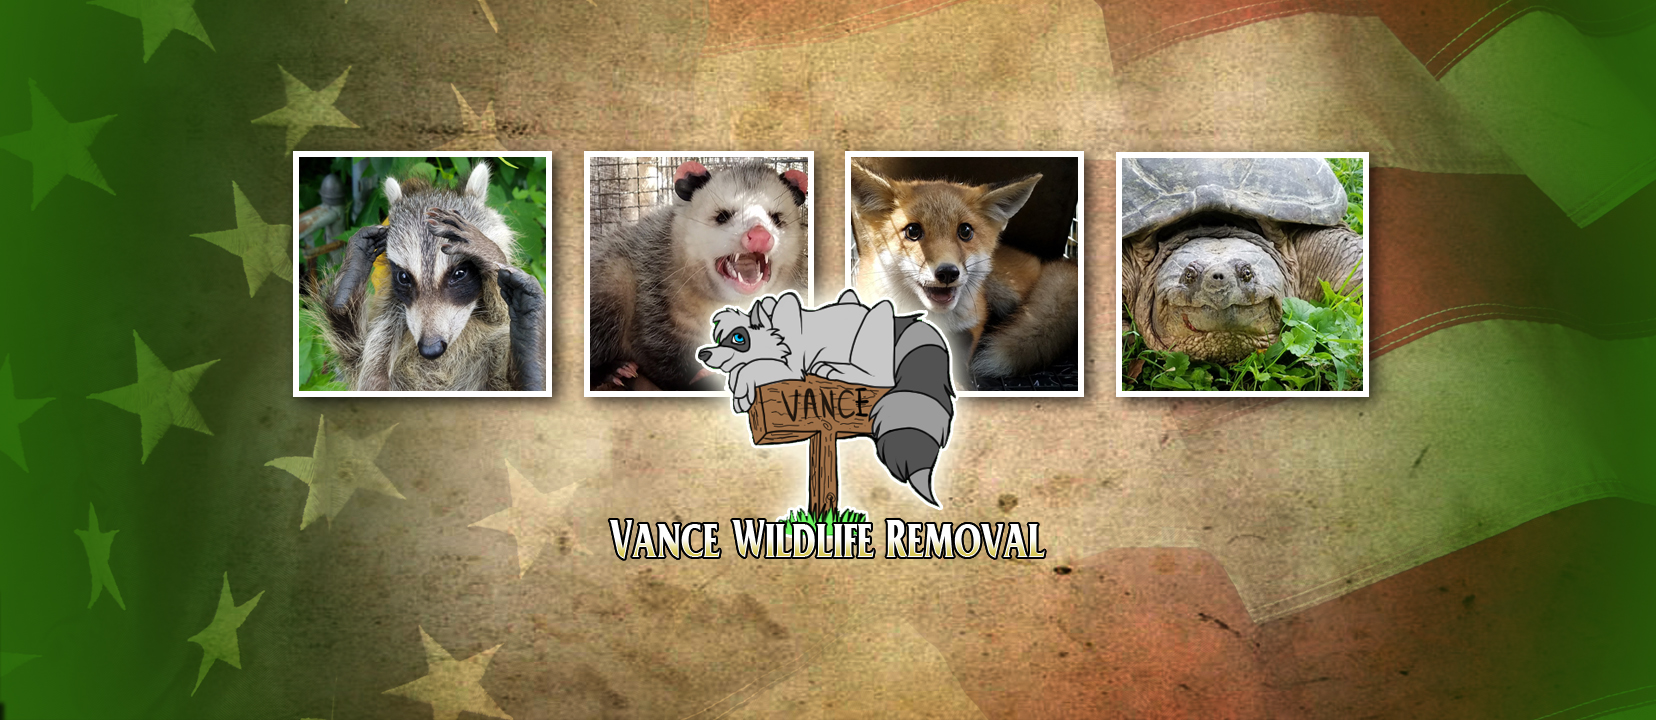 Bennett Wildlife Removal - Wildlife Removal, Nuisance Wildlife